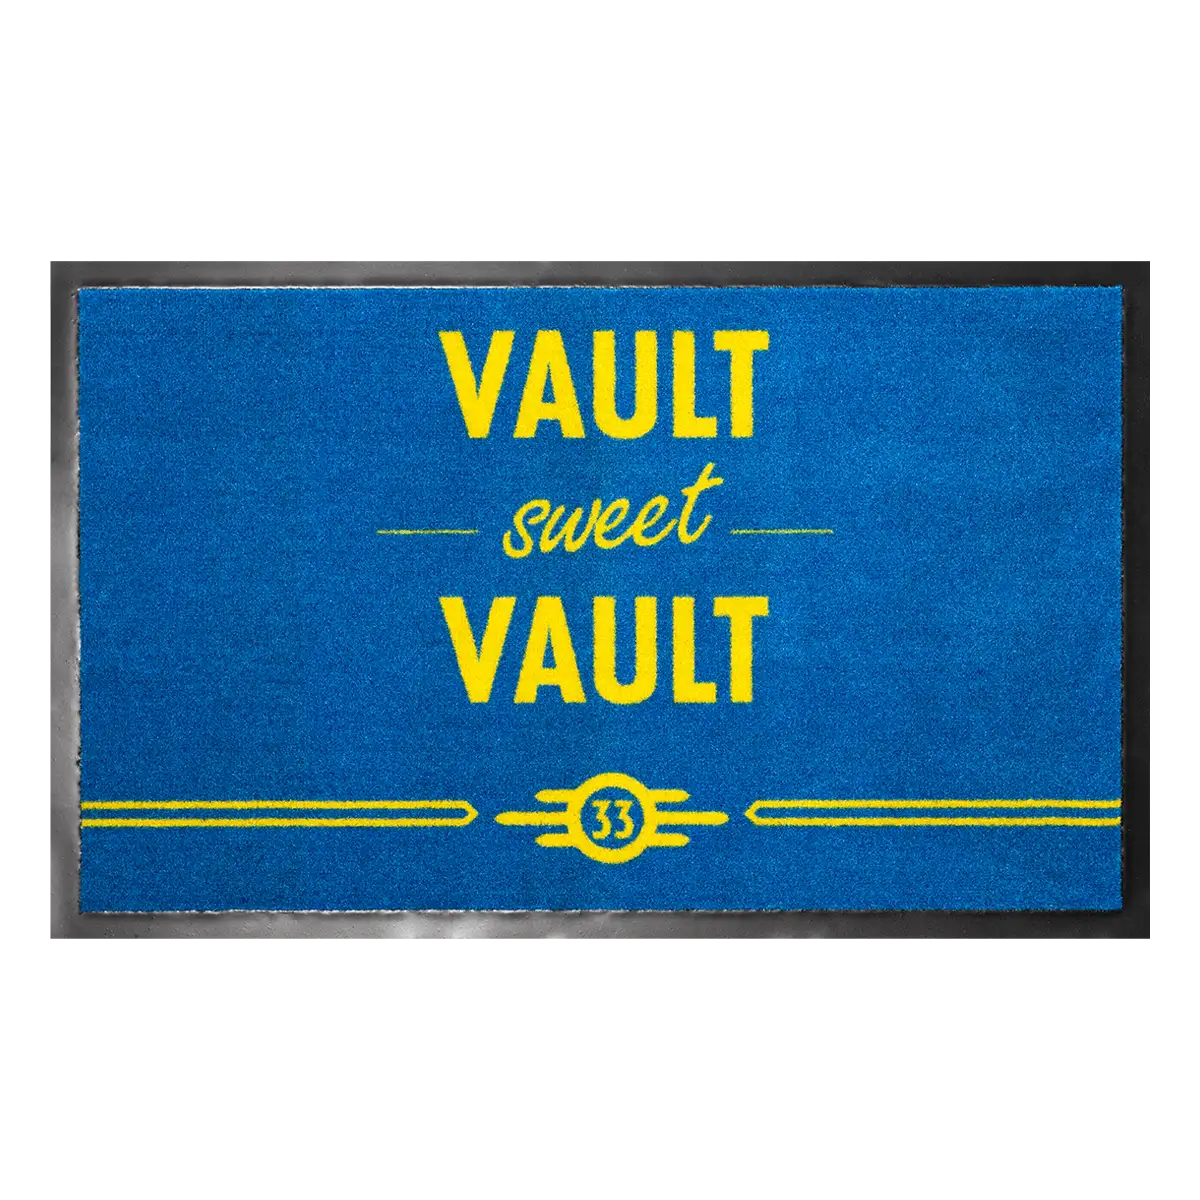 Fallout Doormat "Vault Sweet Vault" Cover